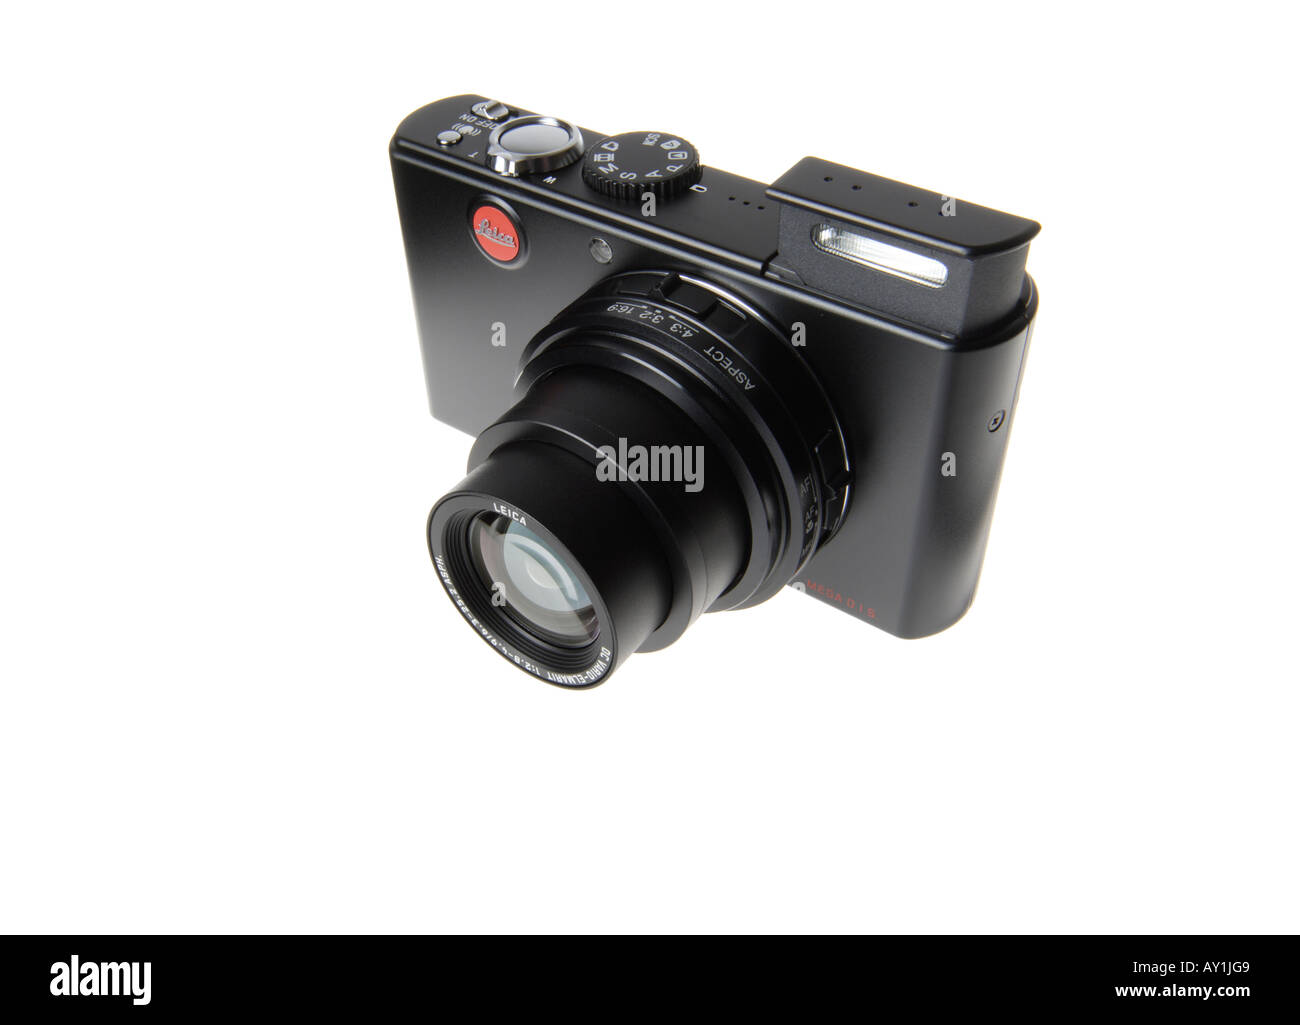 Leica digital camera Stock Photo